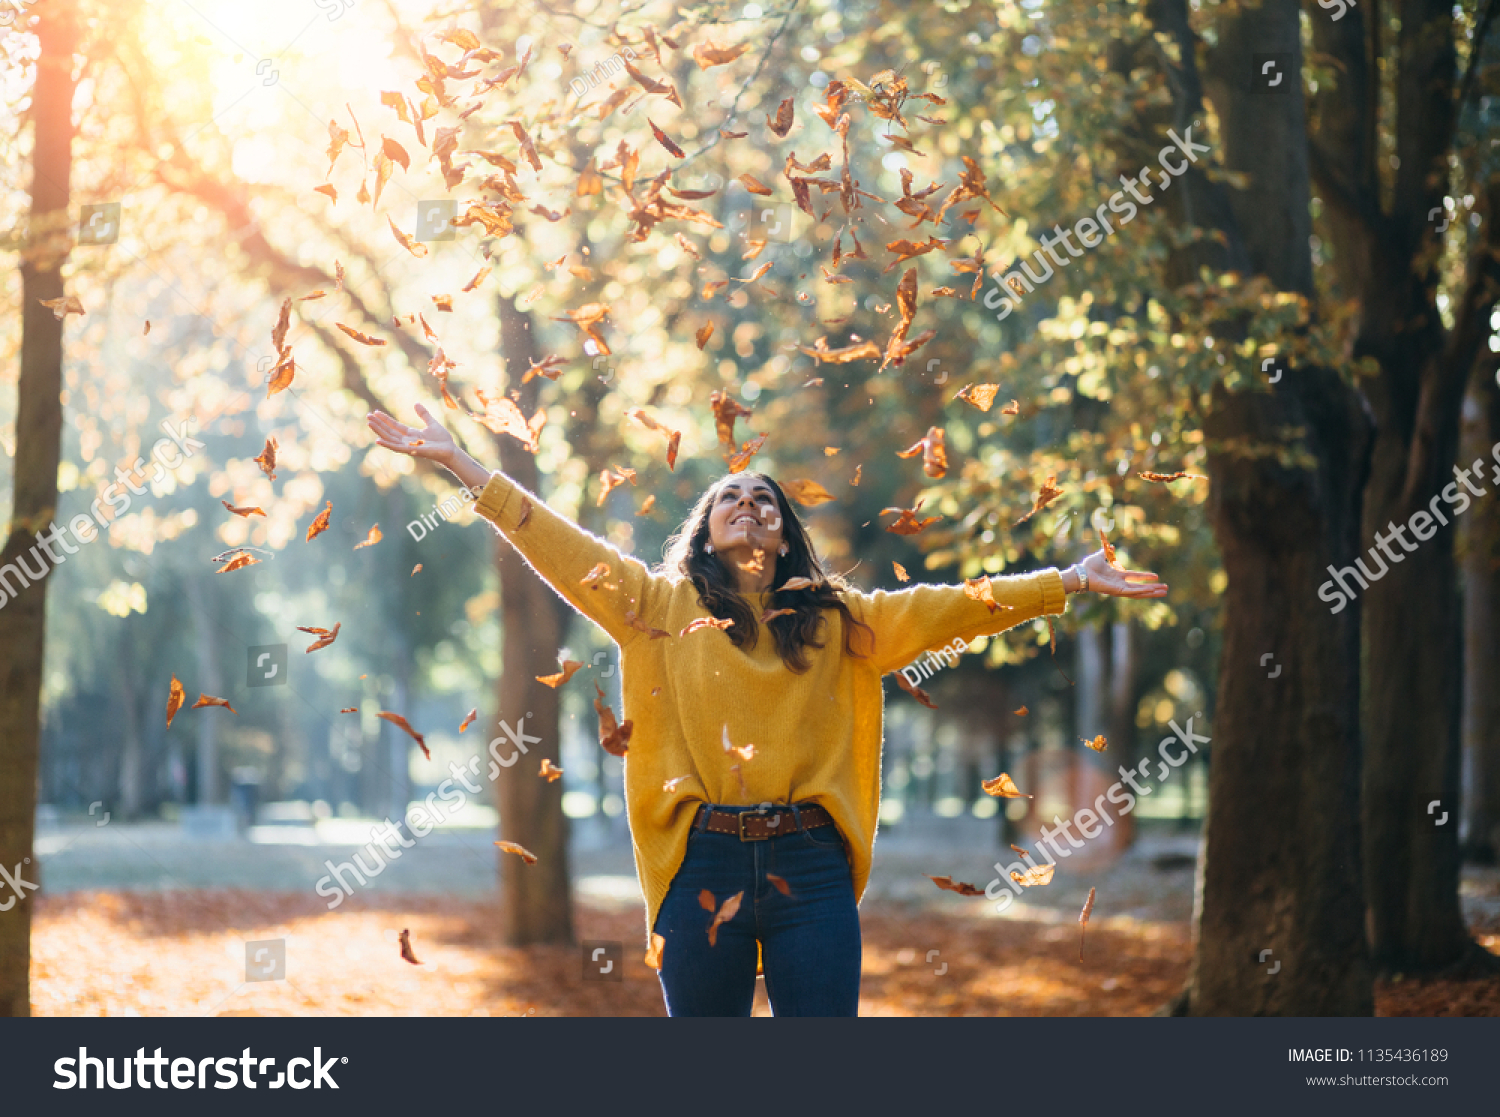 Casual joyful woman having fun throwing leaves in autumn at city park. #1135436189